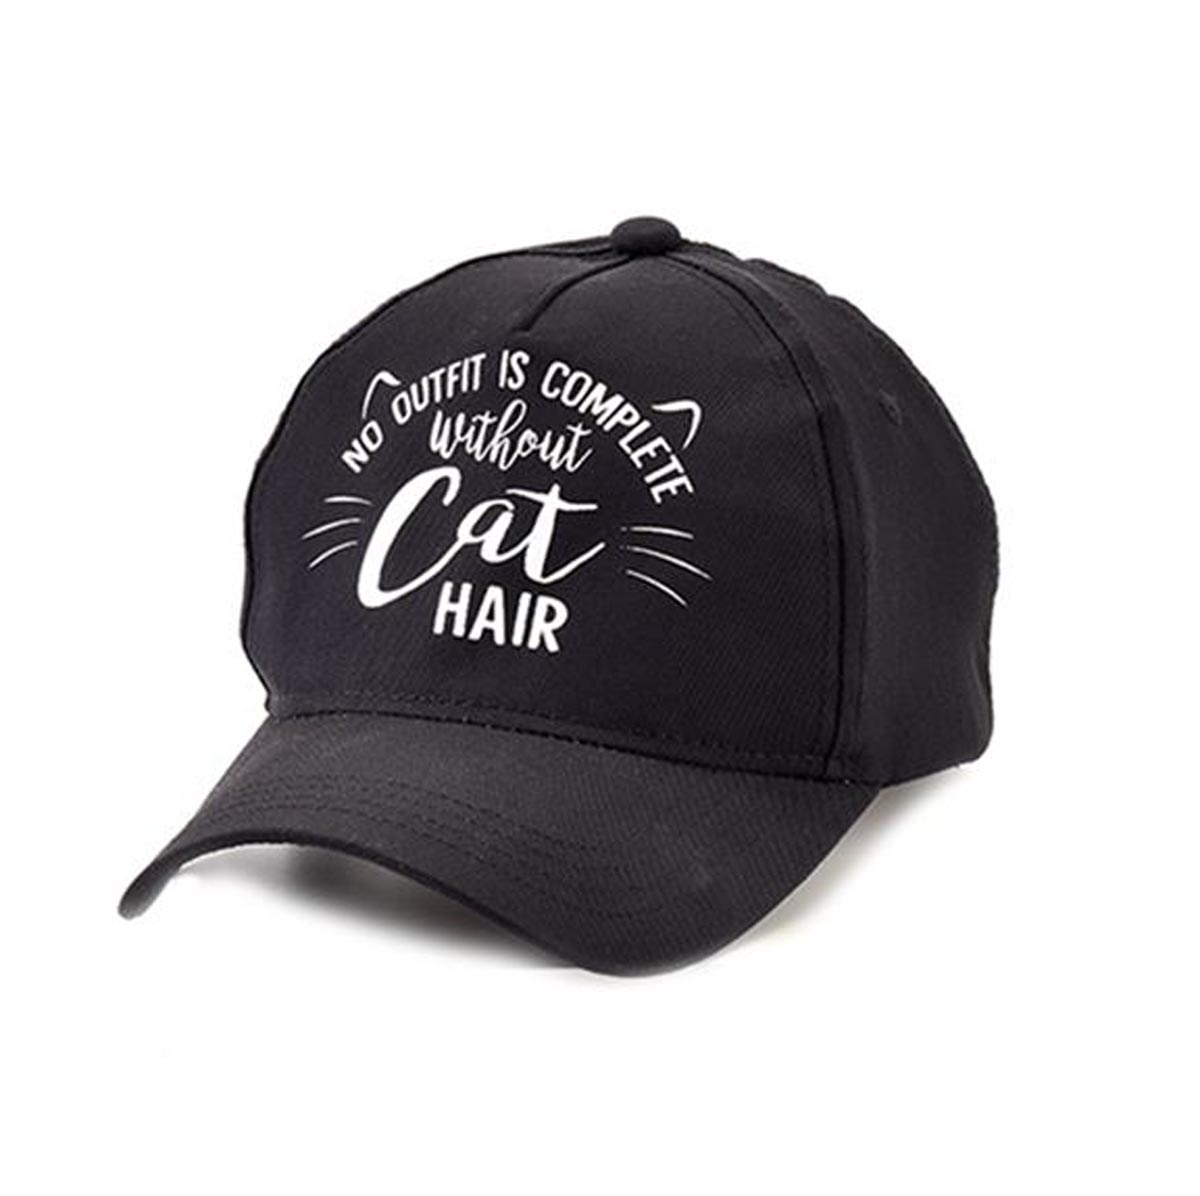 Furever Yours "Cat Hair" Hat